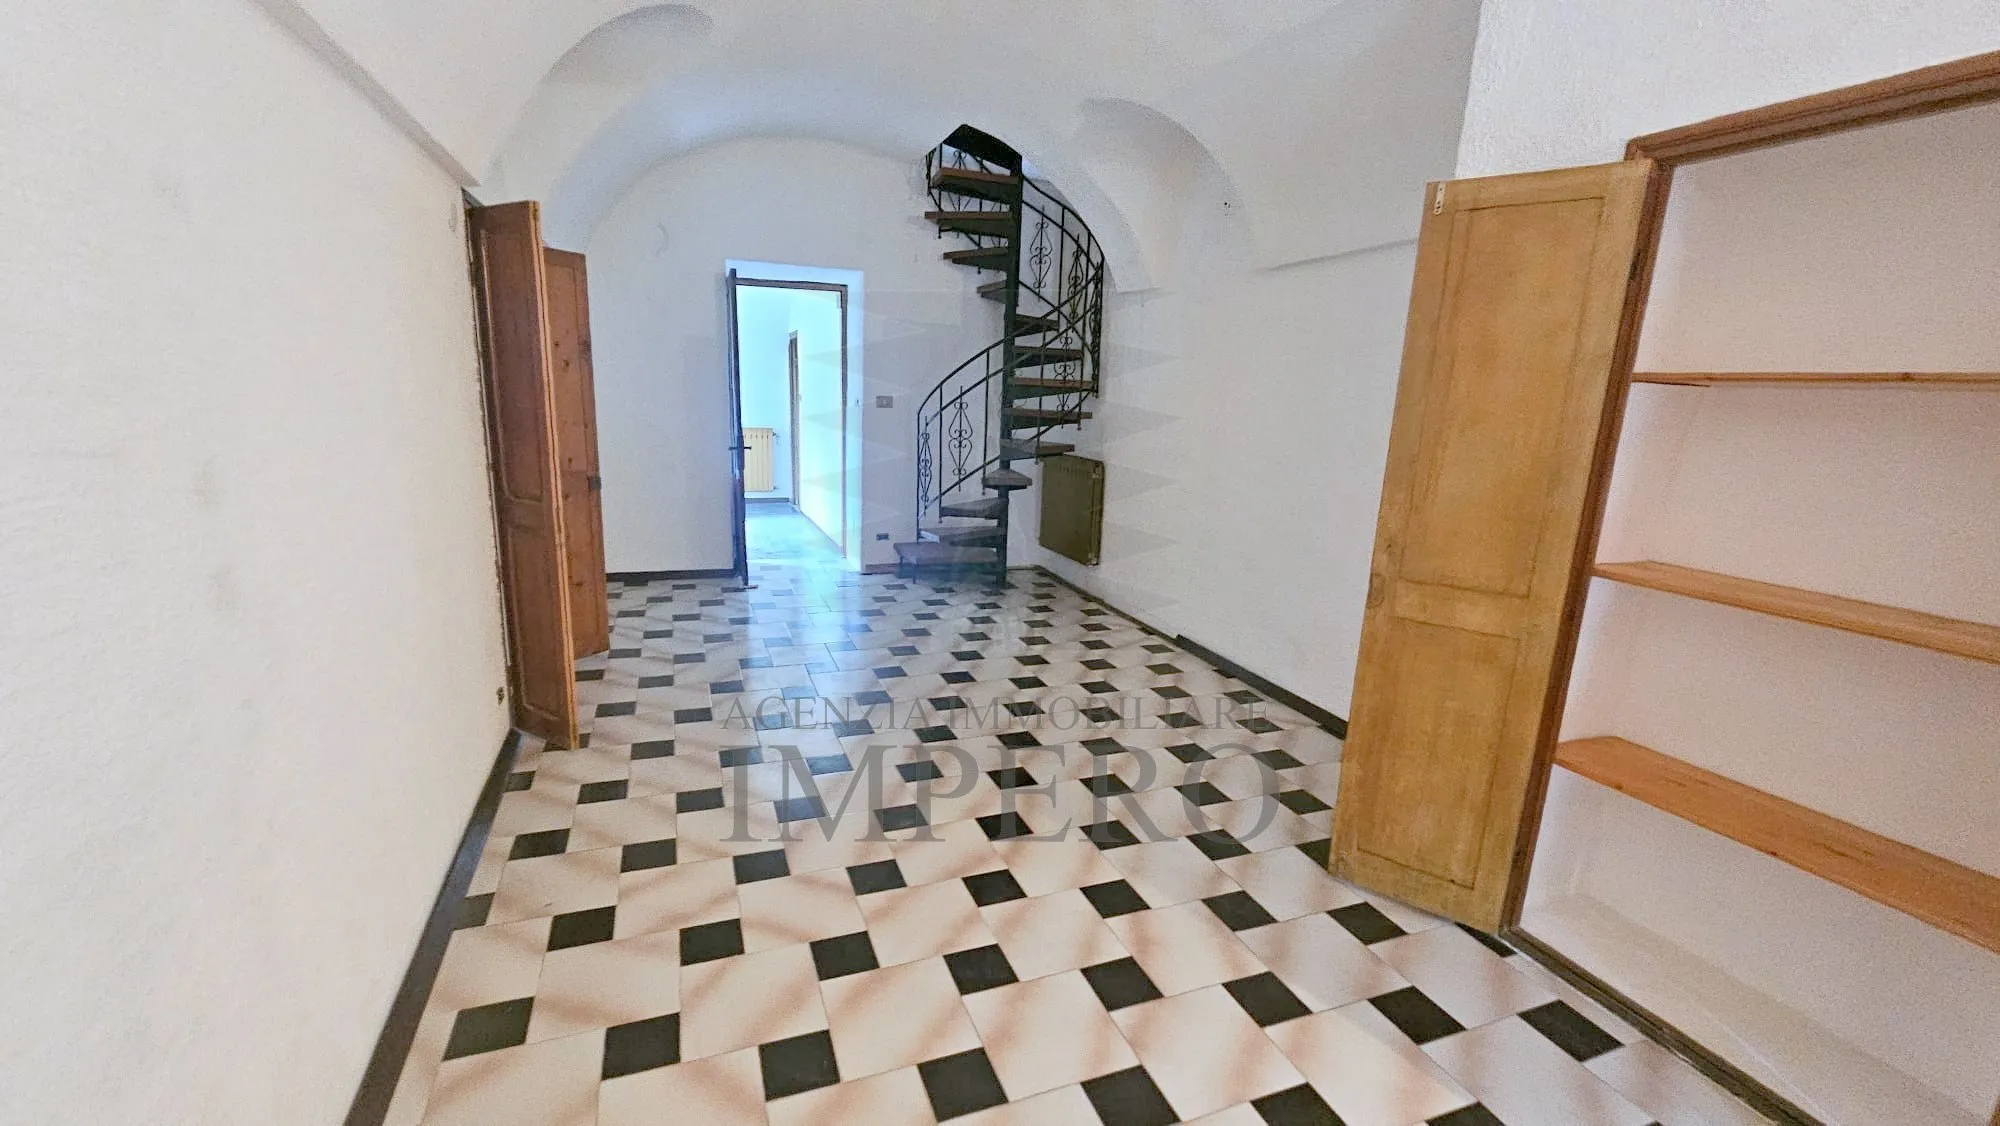 Immagine per casa in vendita a Dolceacqua via Vignali 33